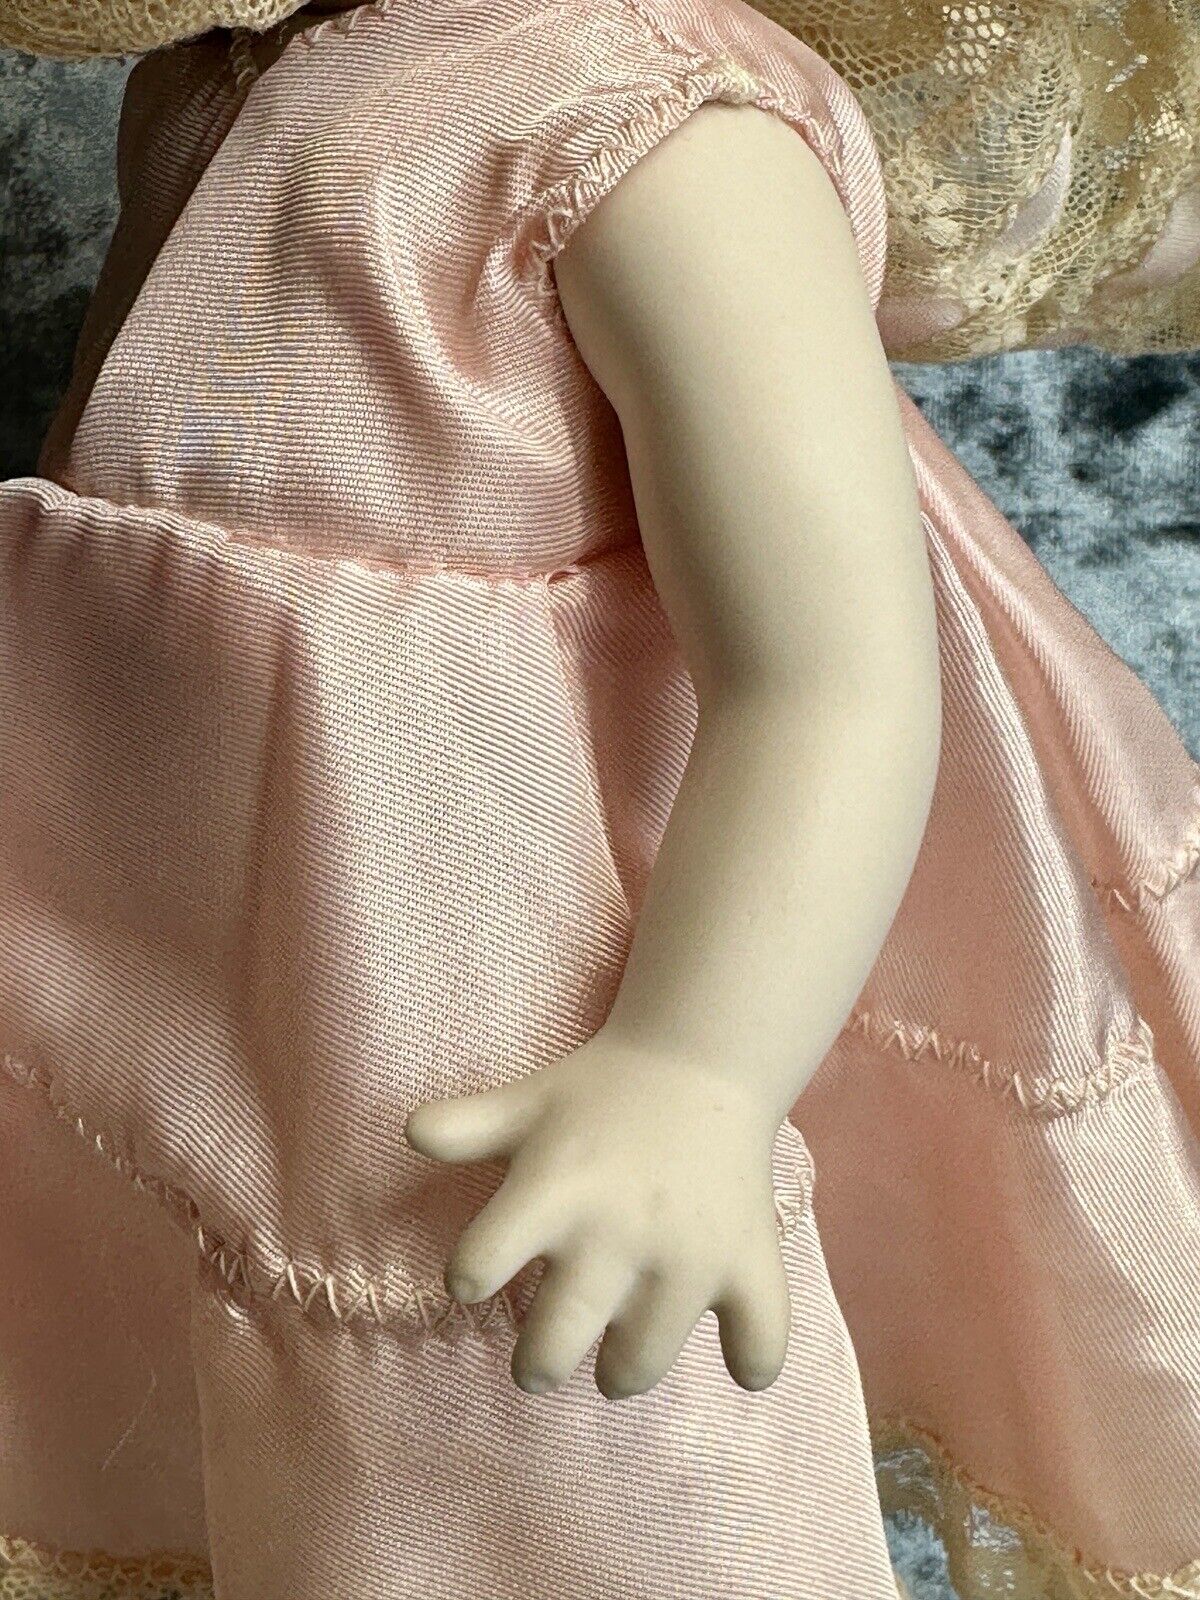 2 Rare Vintage Reproduction of Swaine & Co Porcelain Blue Boy & Pink Girl Dolls